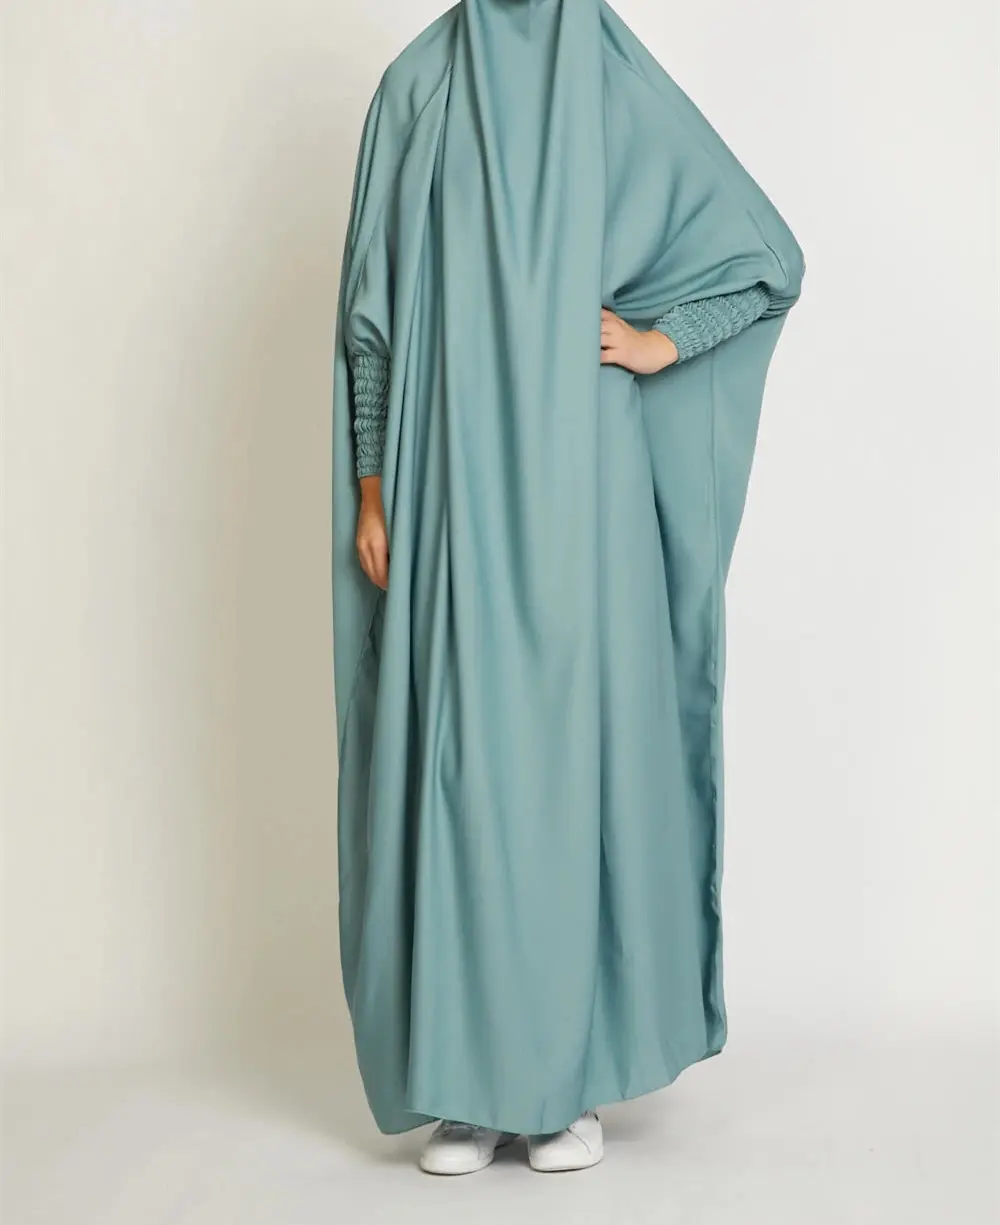 2022 Dec New Arrival One Piece Full Length Jilbab Prayer Abaya High Quality Shinny Polyester Dresses